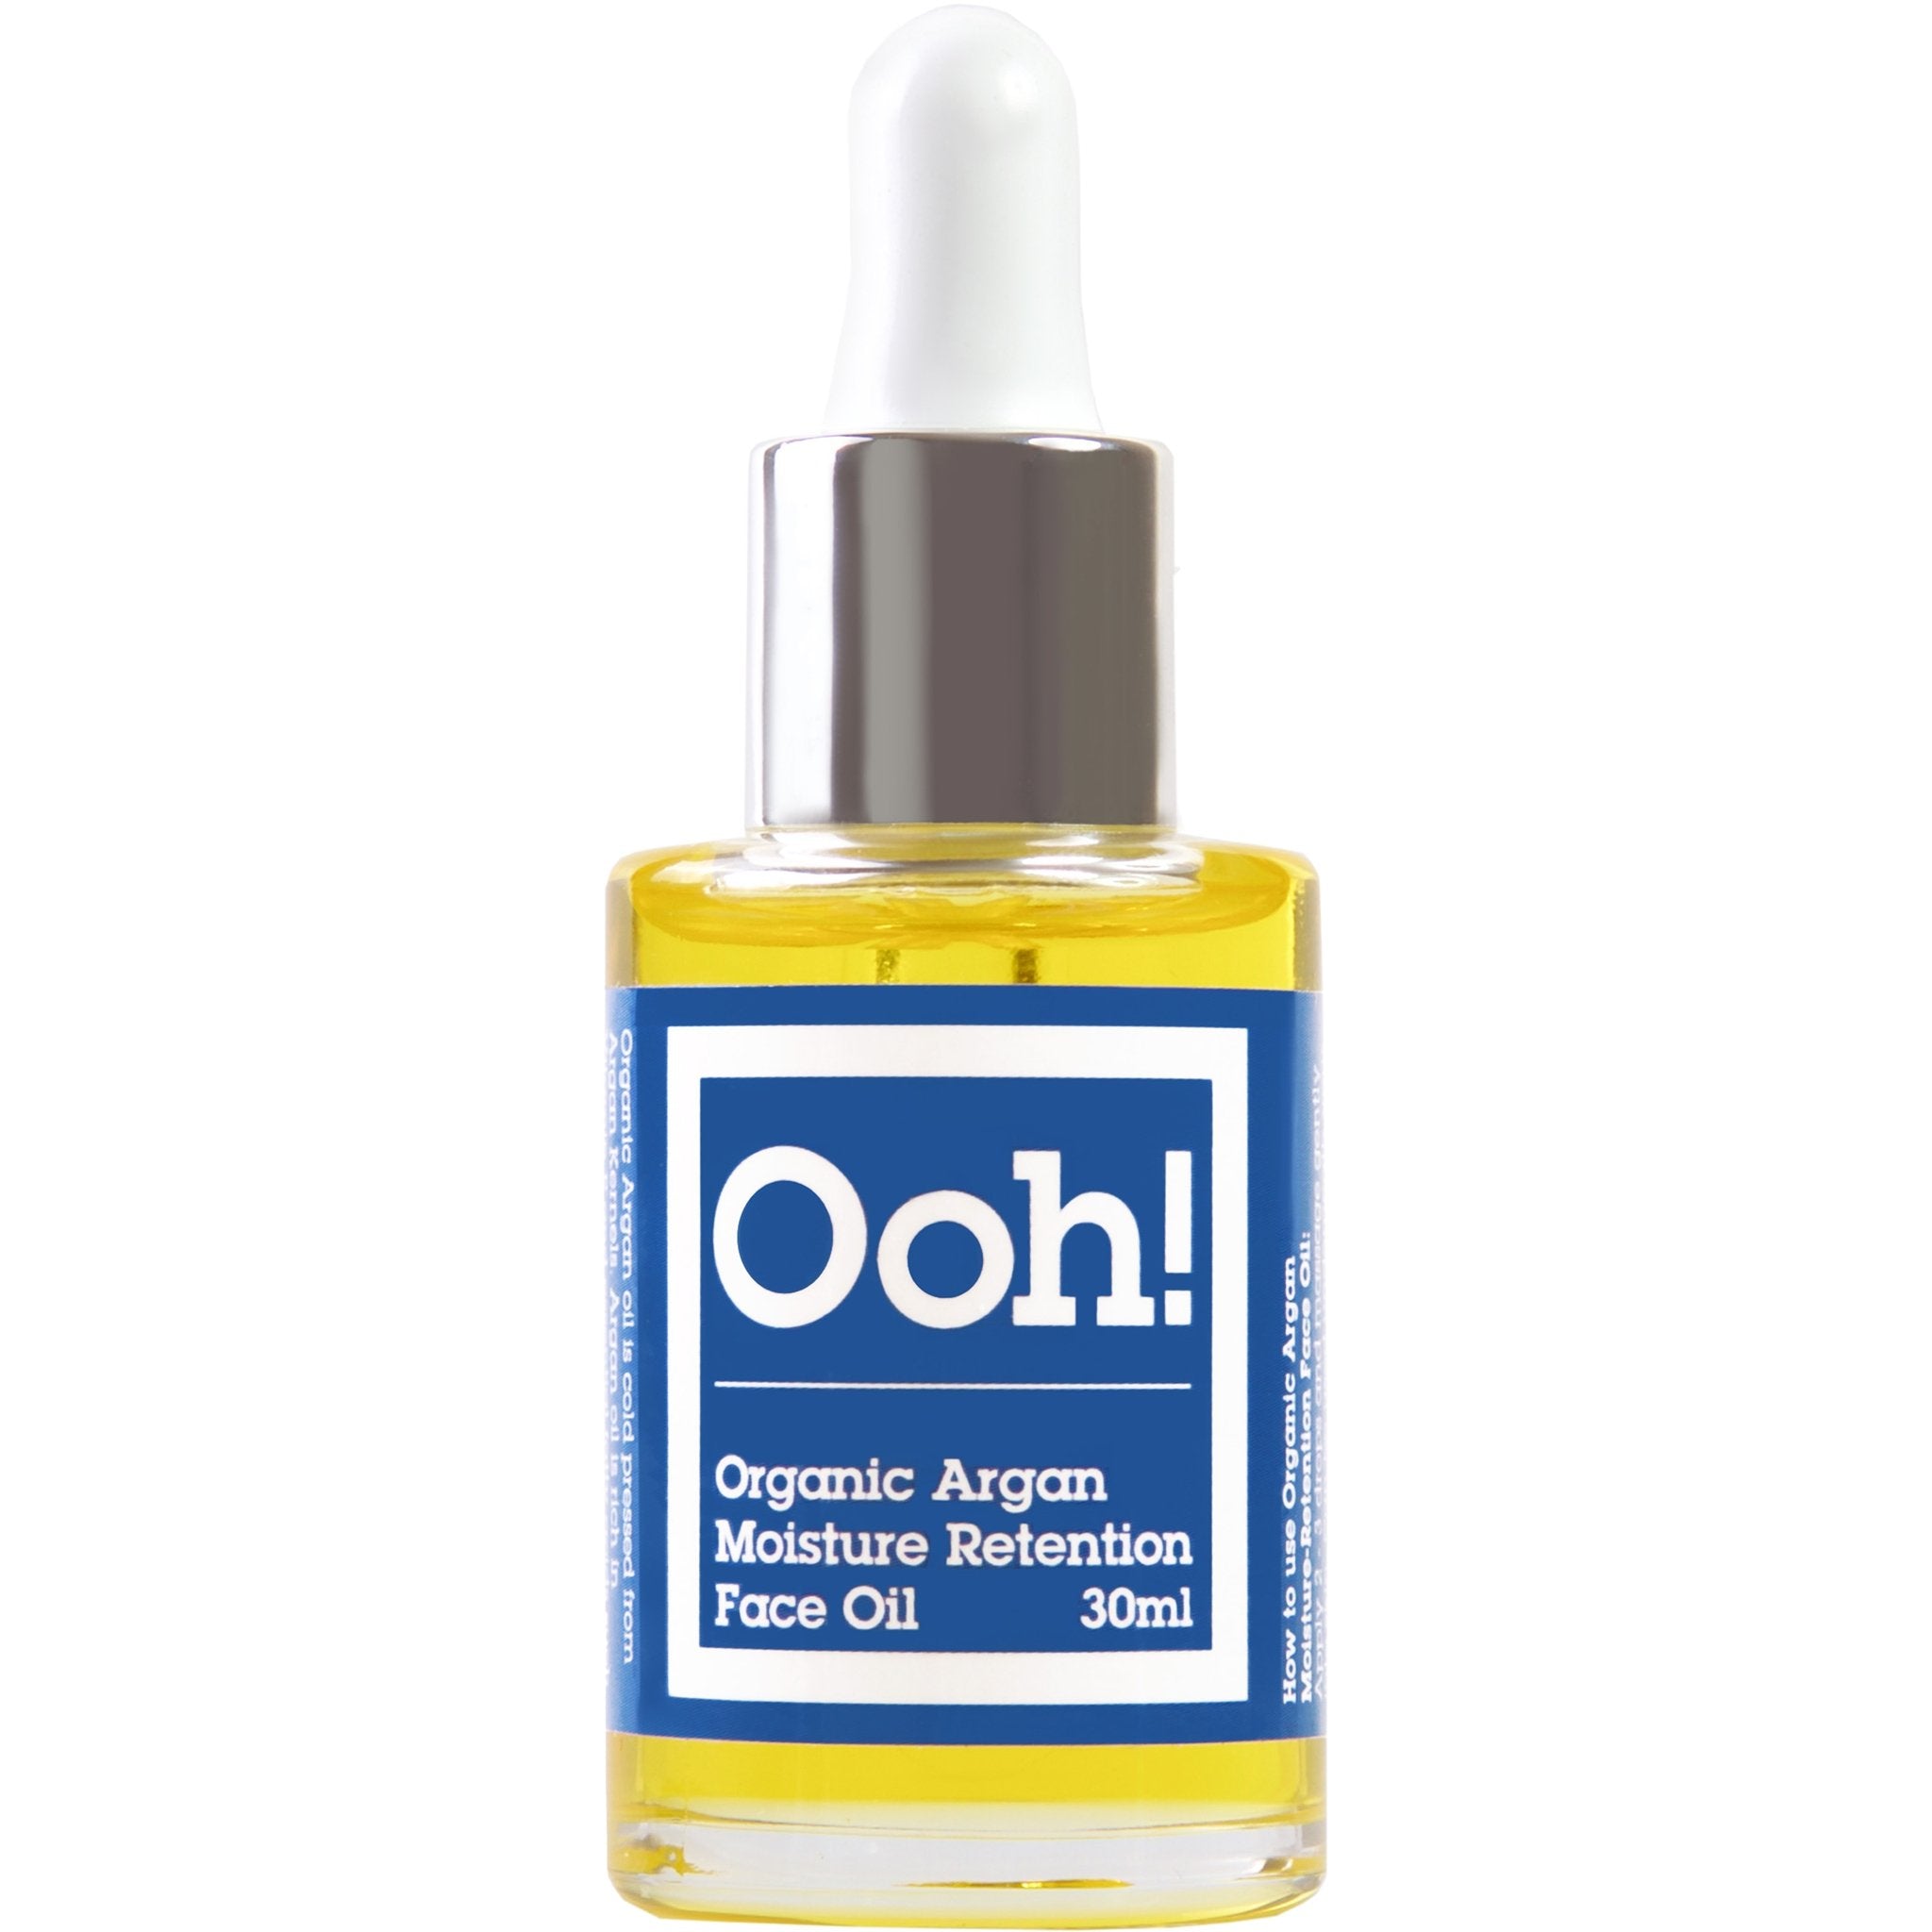 Organic Argan Moisture Retention Face Oil - mypure.co.uk